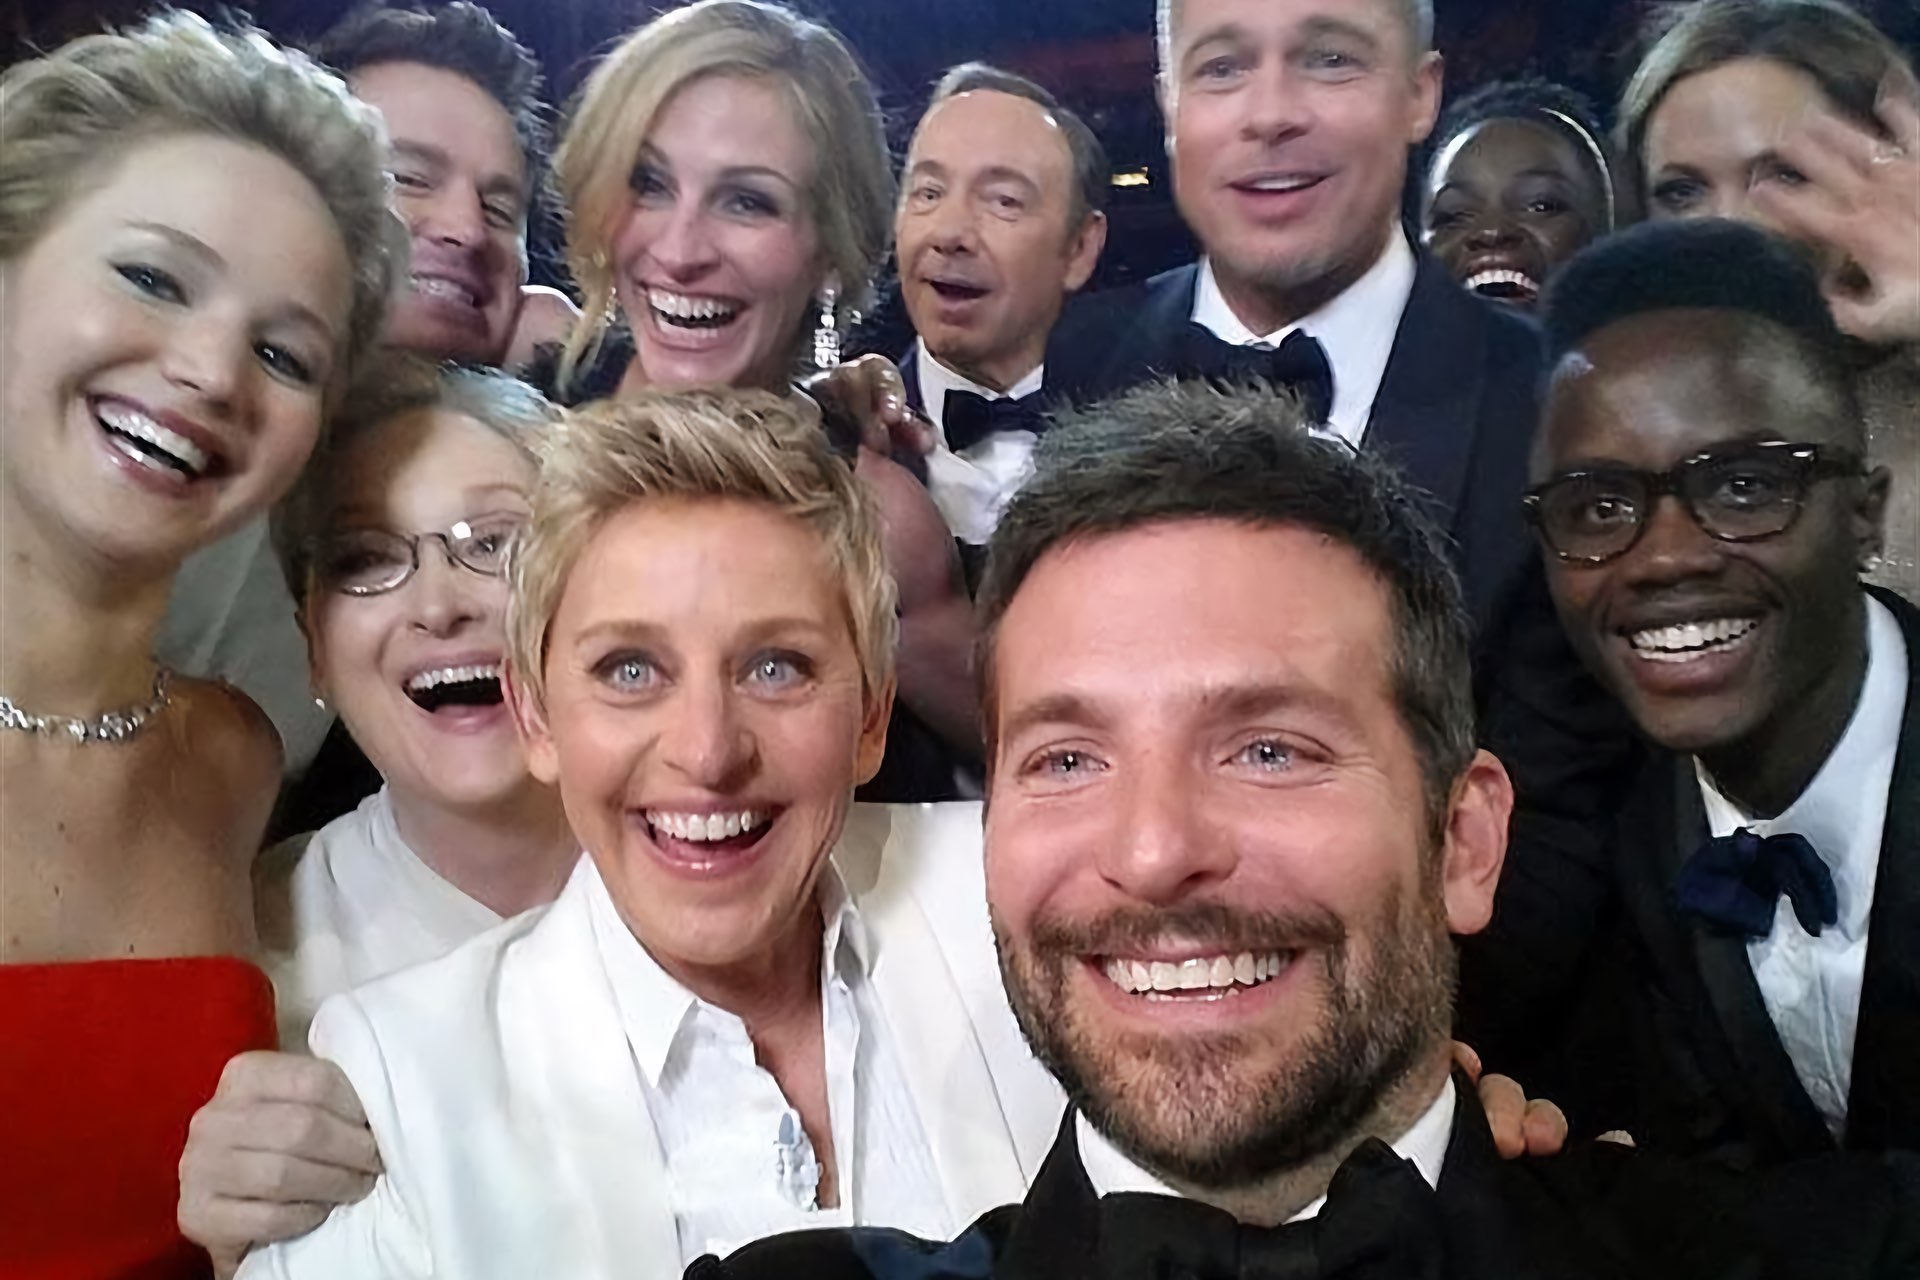 Bradley Cooper selfie taken at the 2014 Oscars award show